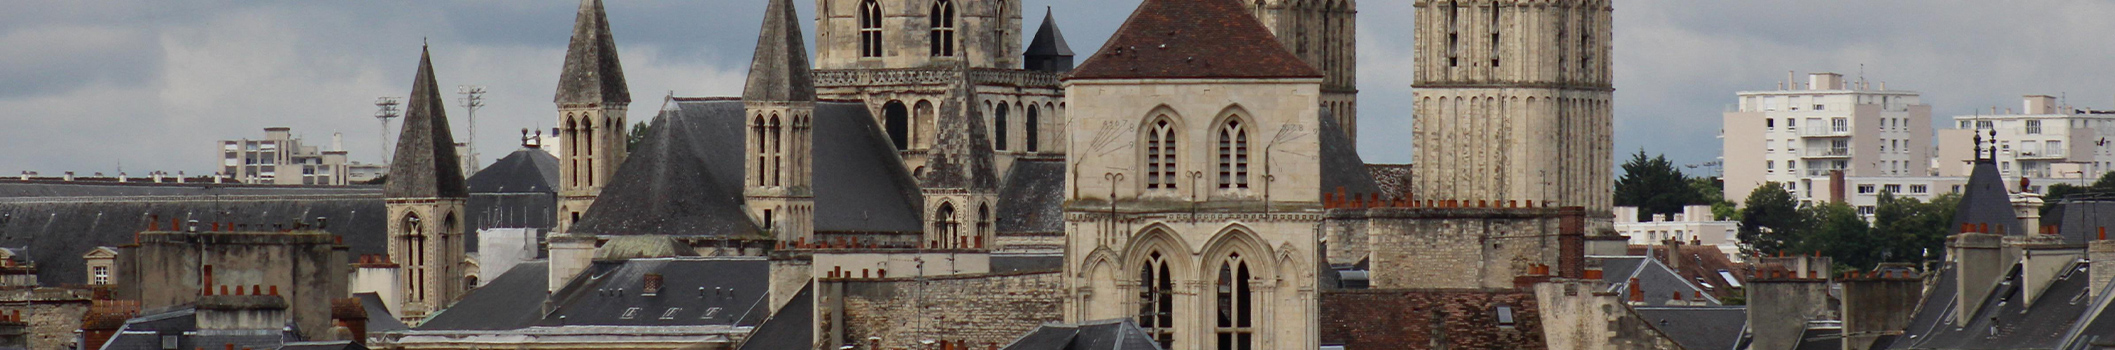 Abbaye de Saint Etienne Camping Caen